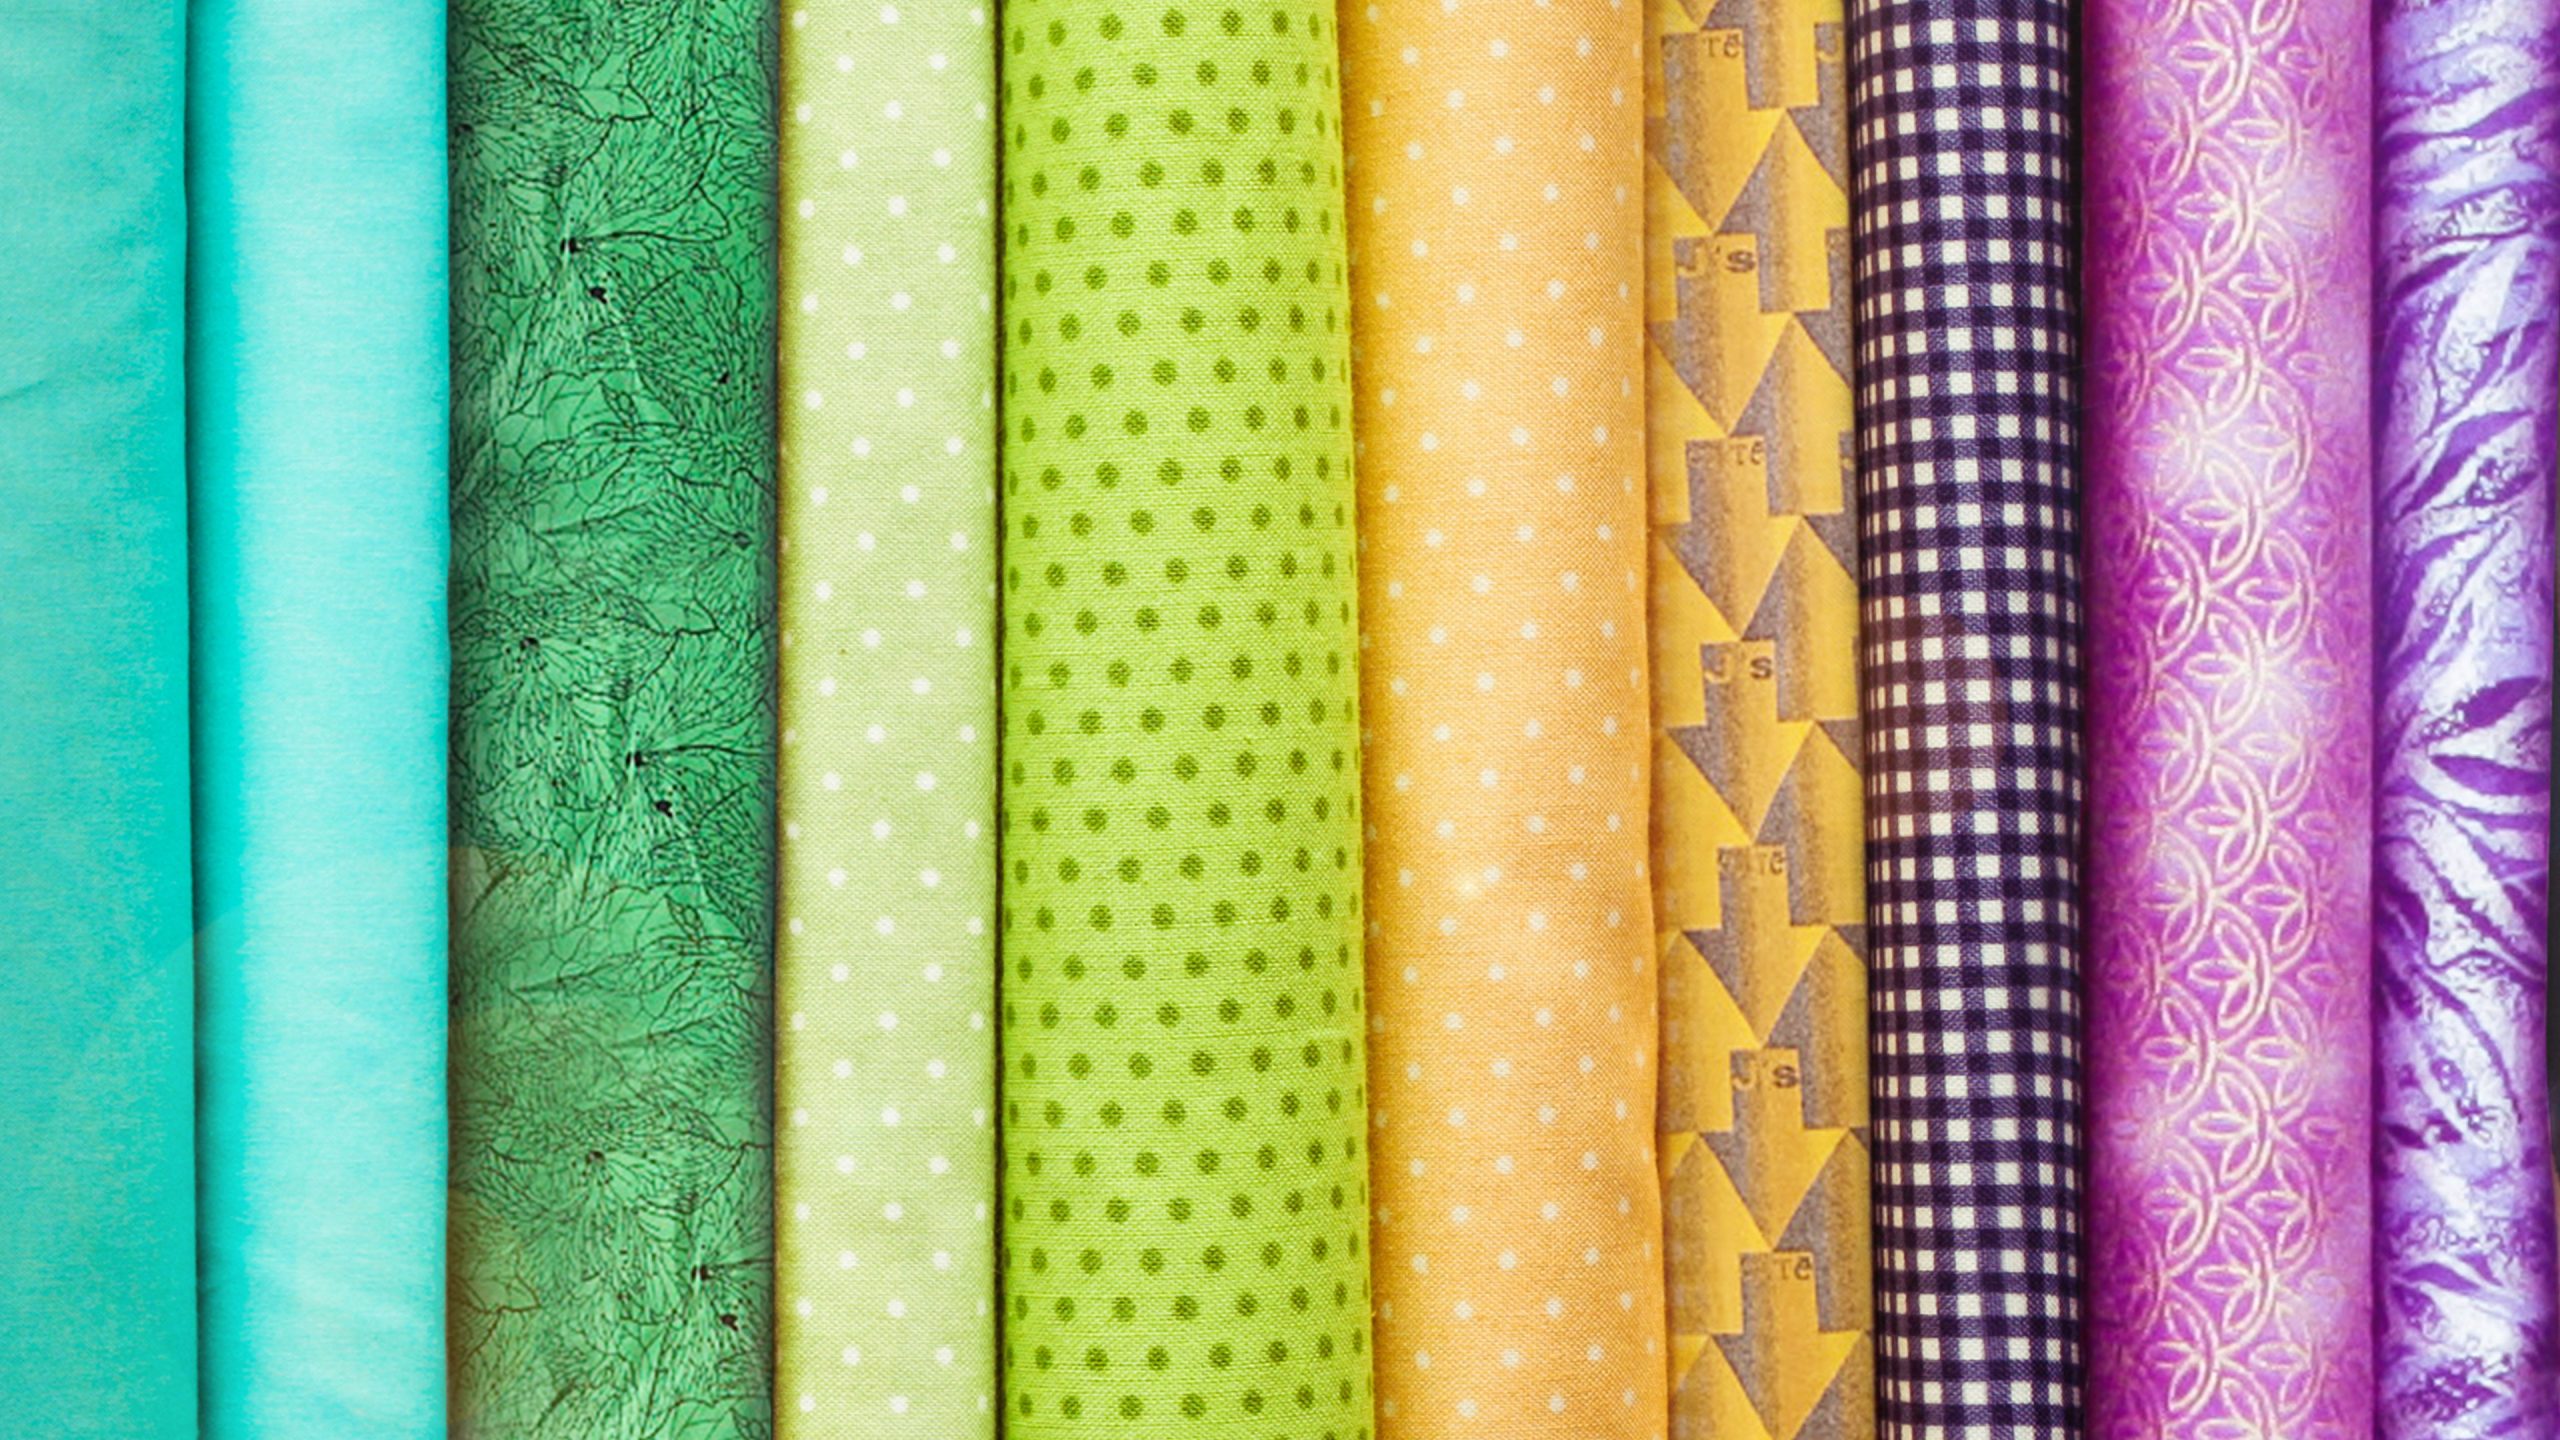 14 Creative Fabric Storage Ideas: Sort Your Fabric Stash and